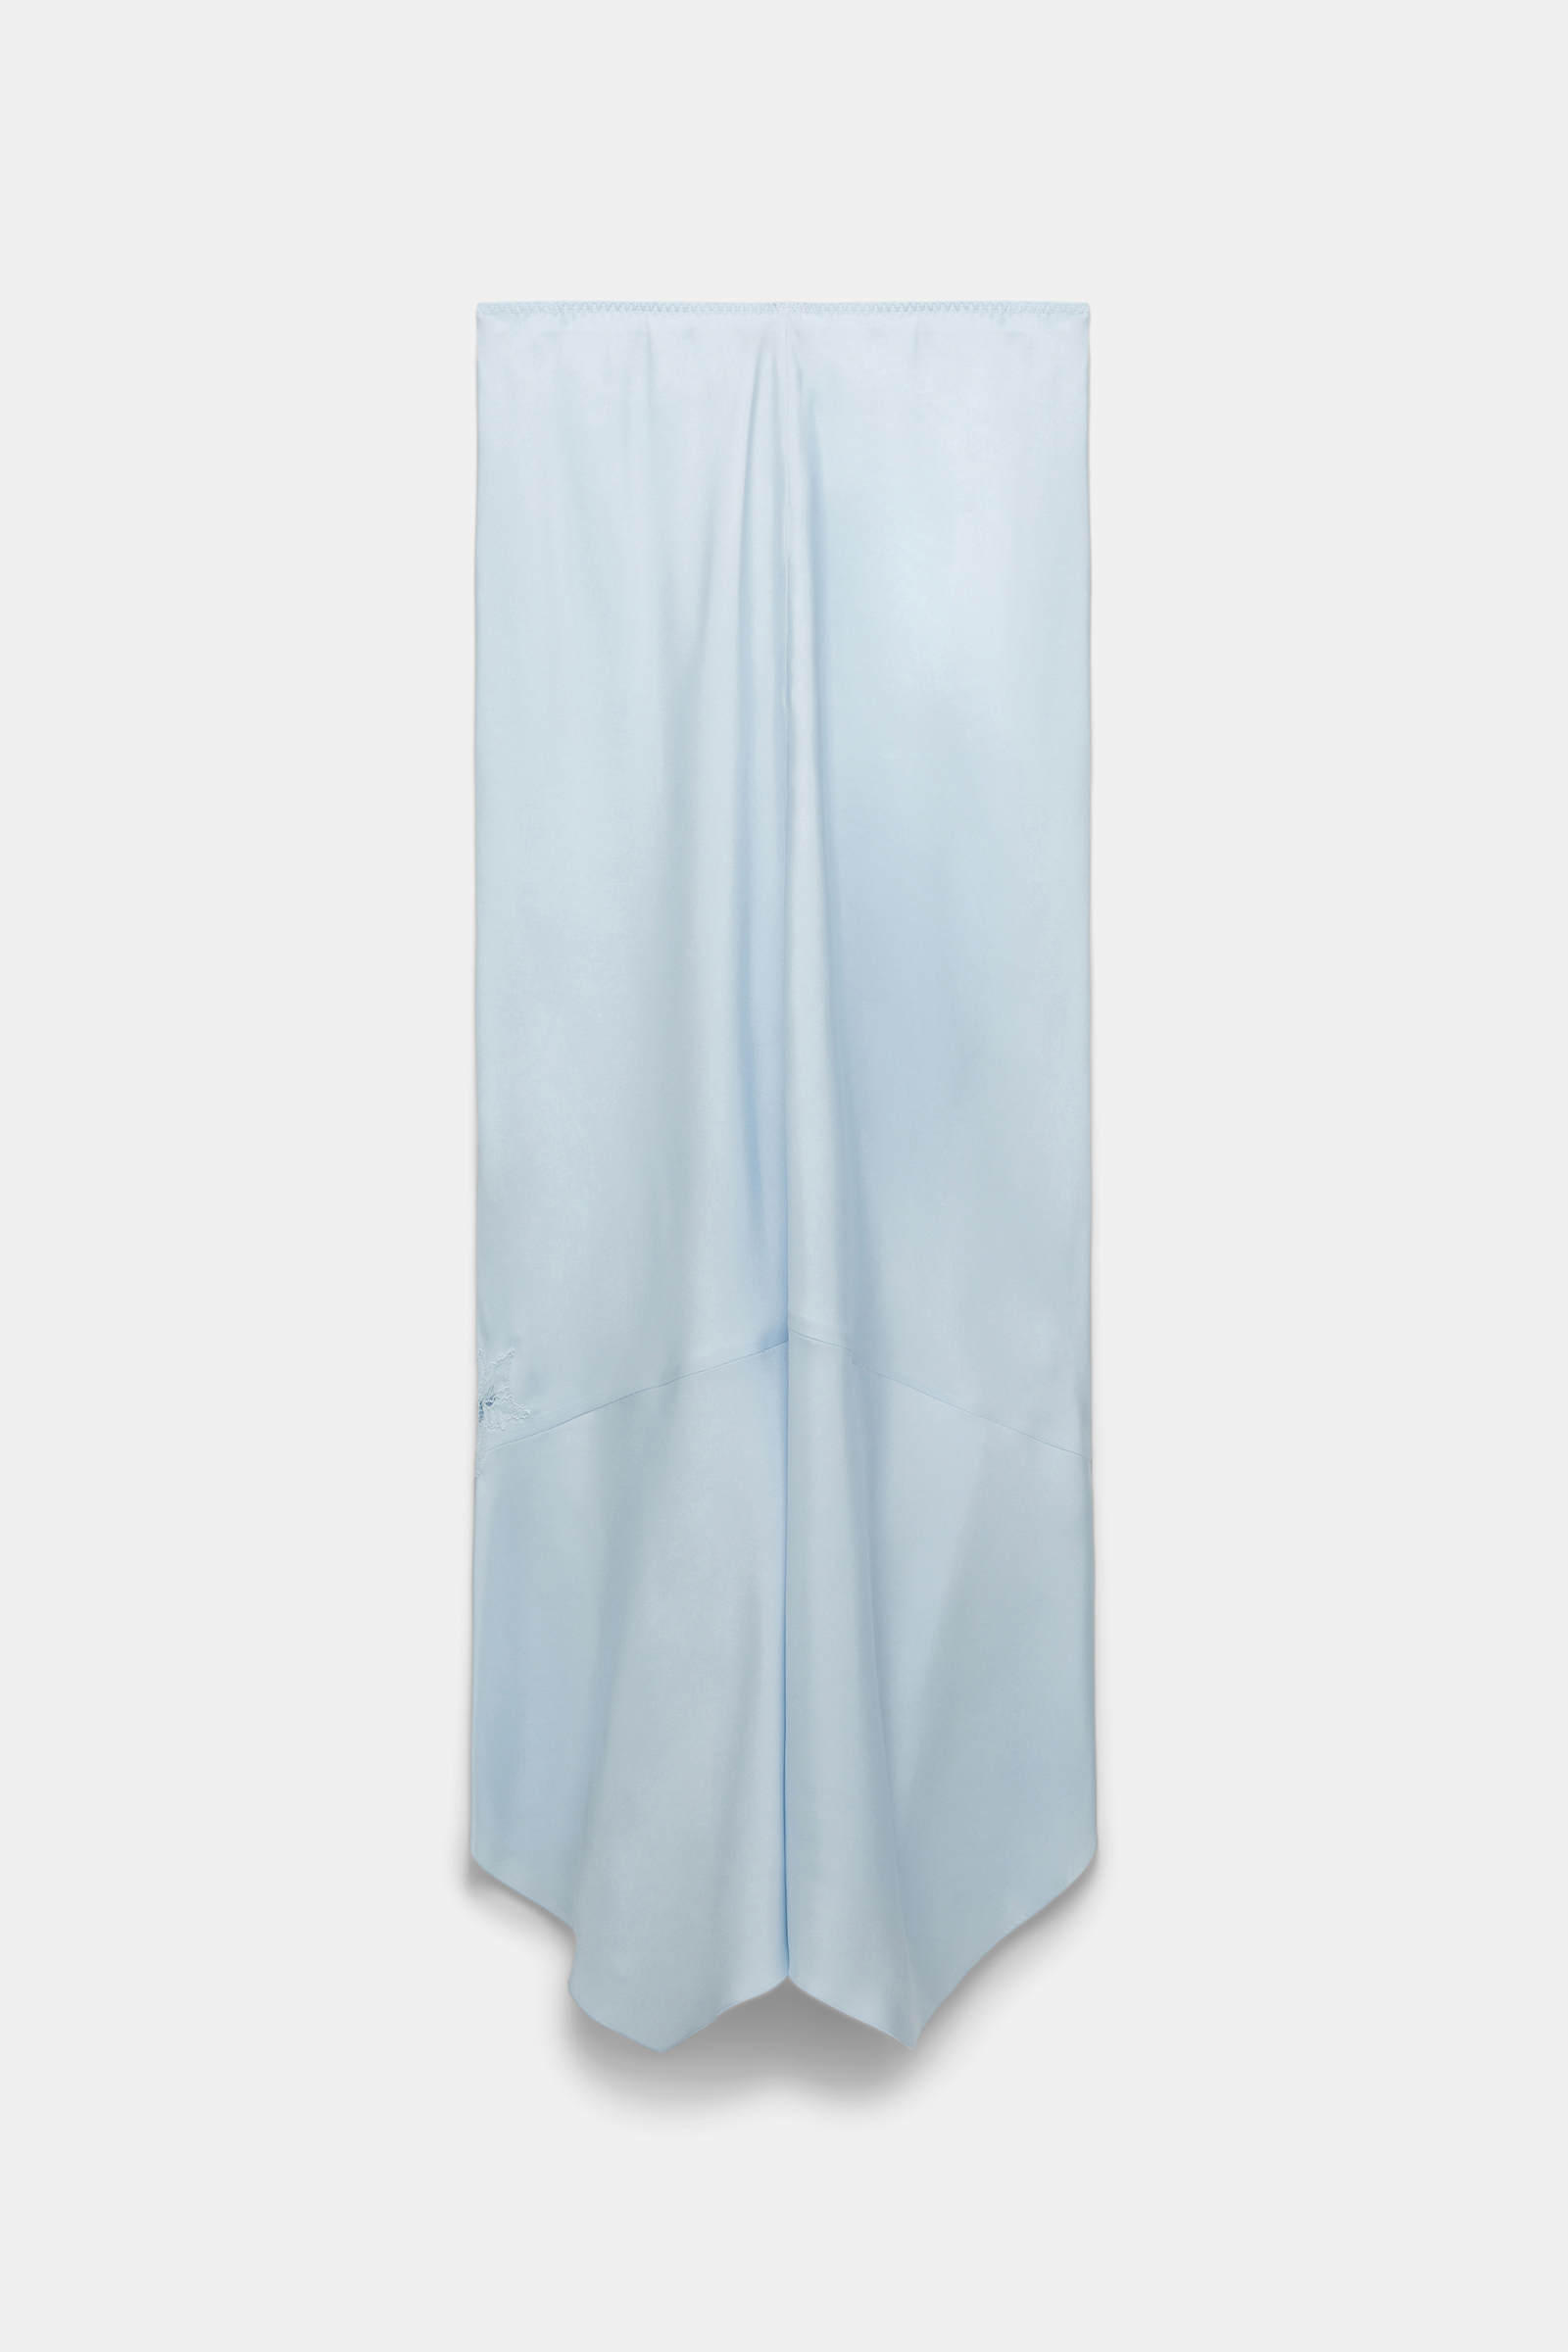 Dorothee Schumacher Silk twill lingerie skirt with an asymmetric lace insert soft blue